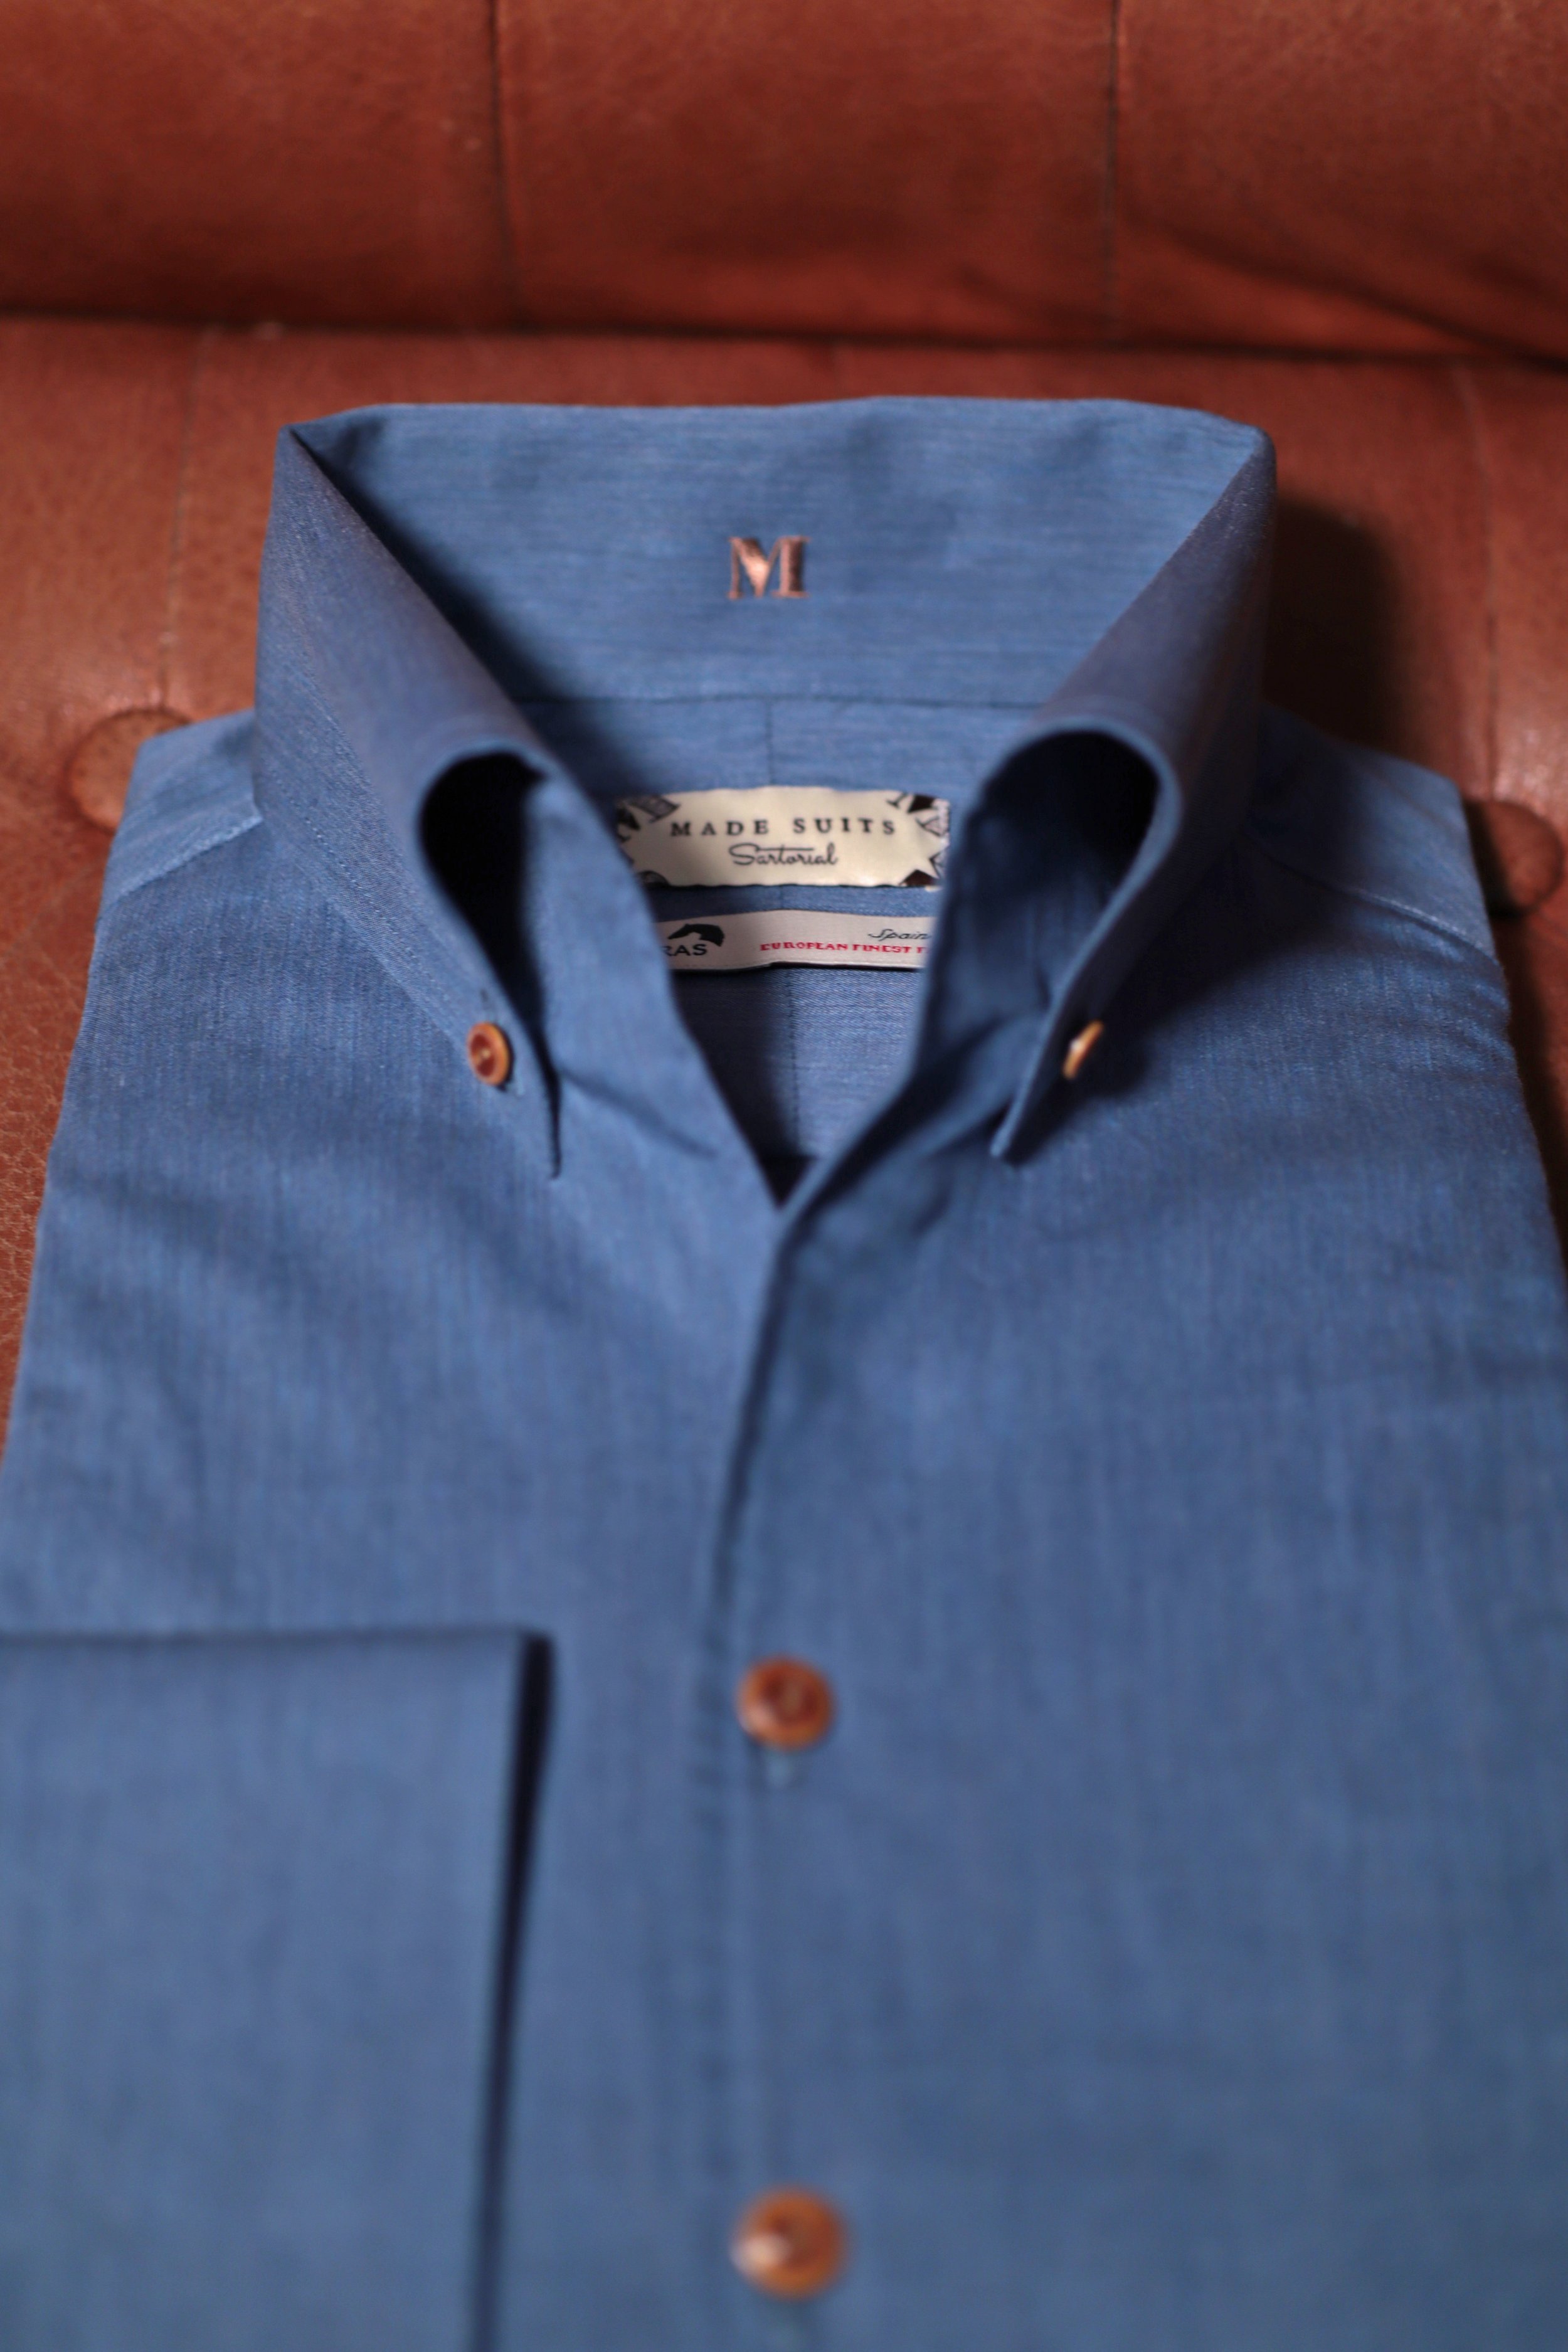 Denim Blue Chambray SIDOGRAS One Piece Collar | Made Suits Tailor Made Shirts Bespoke to measure shirts singapore bespoke mtm collar.JPG